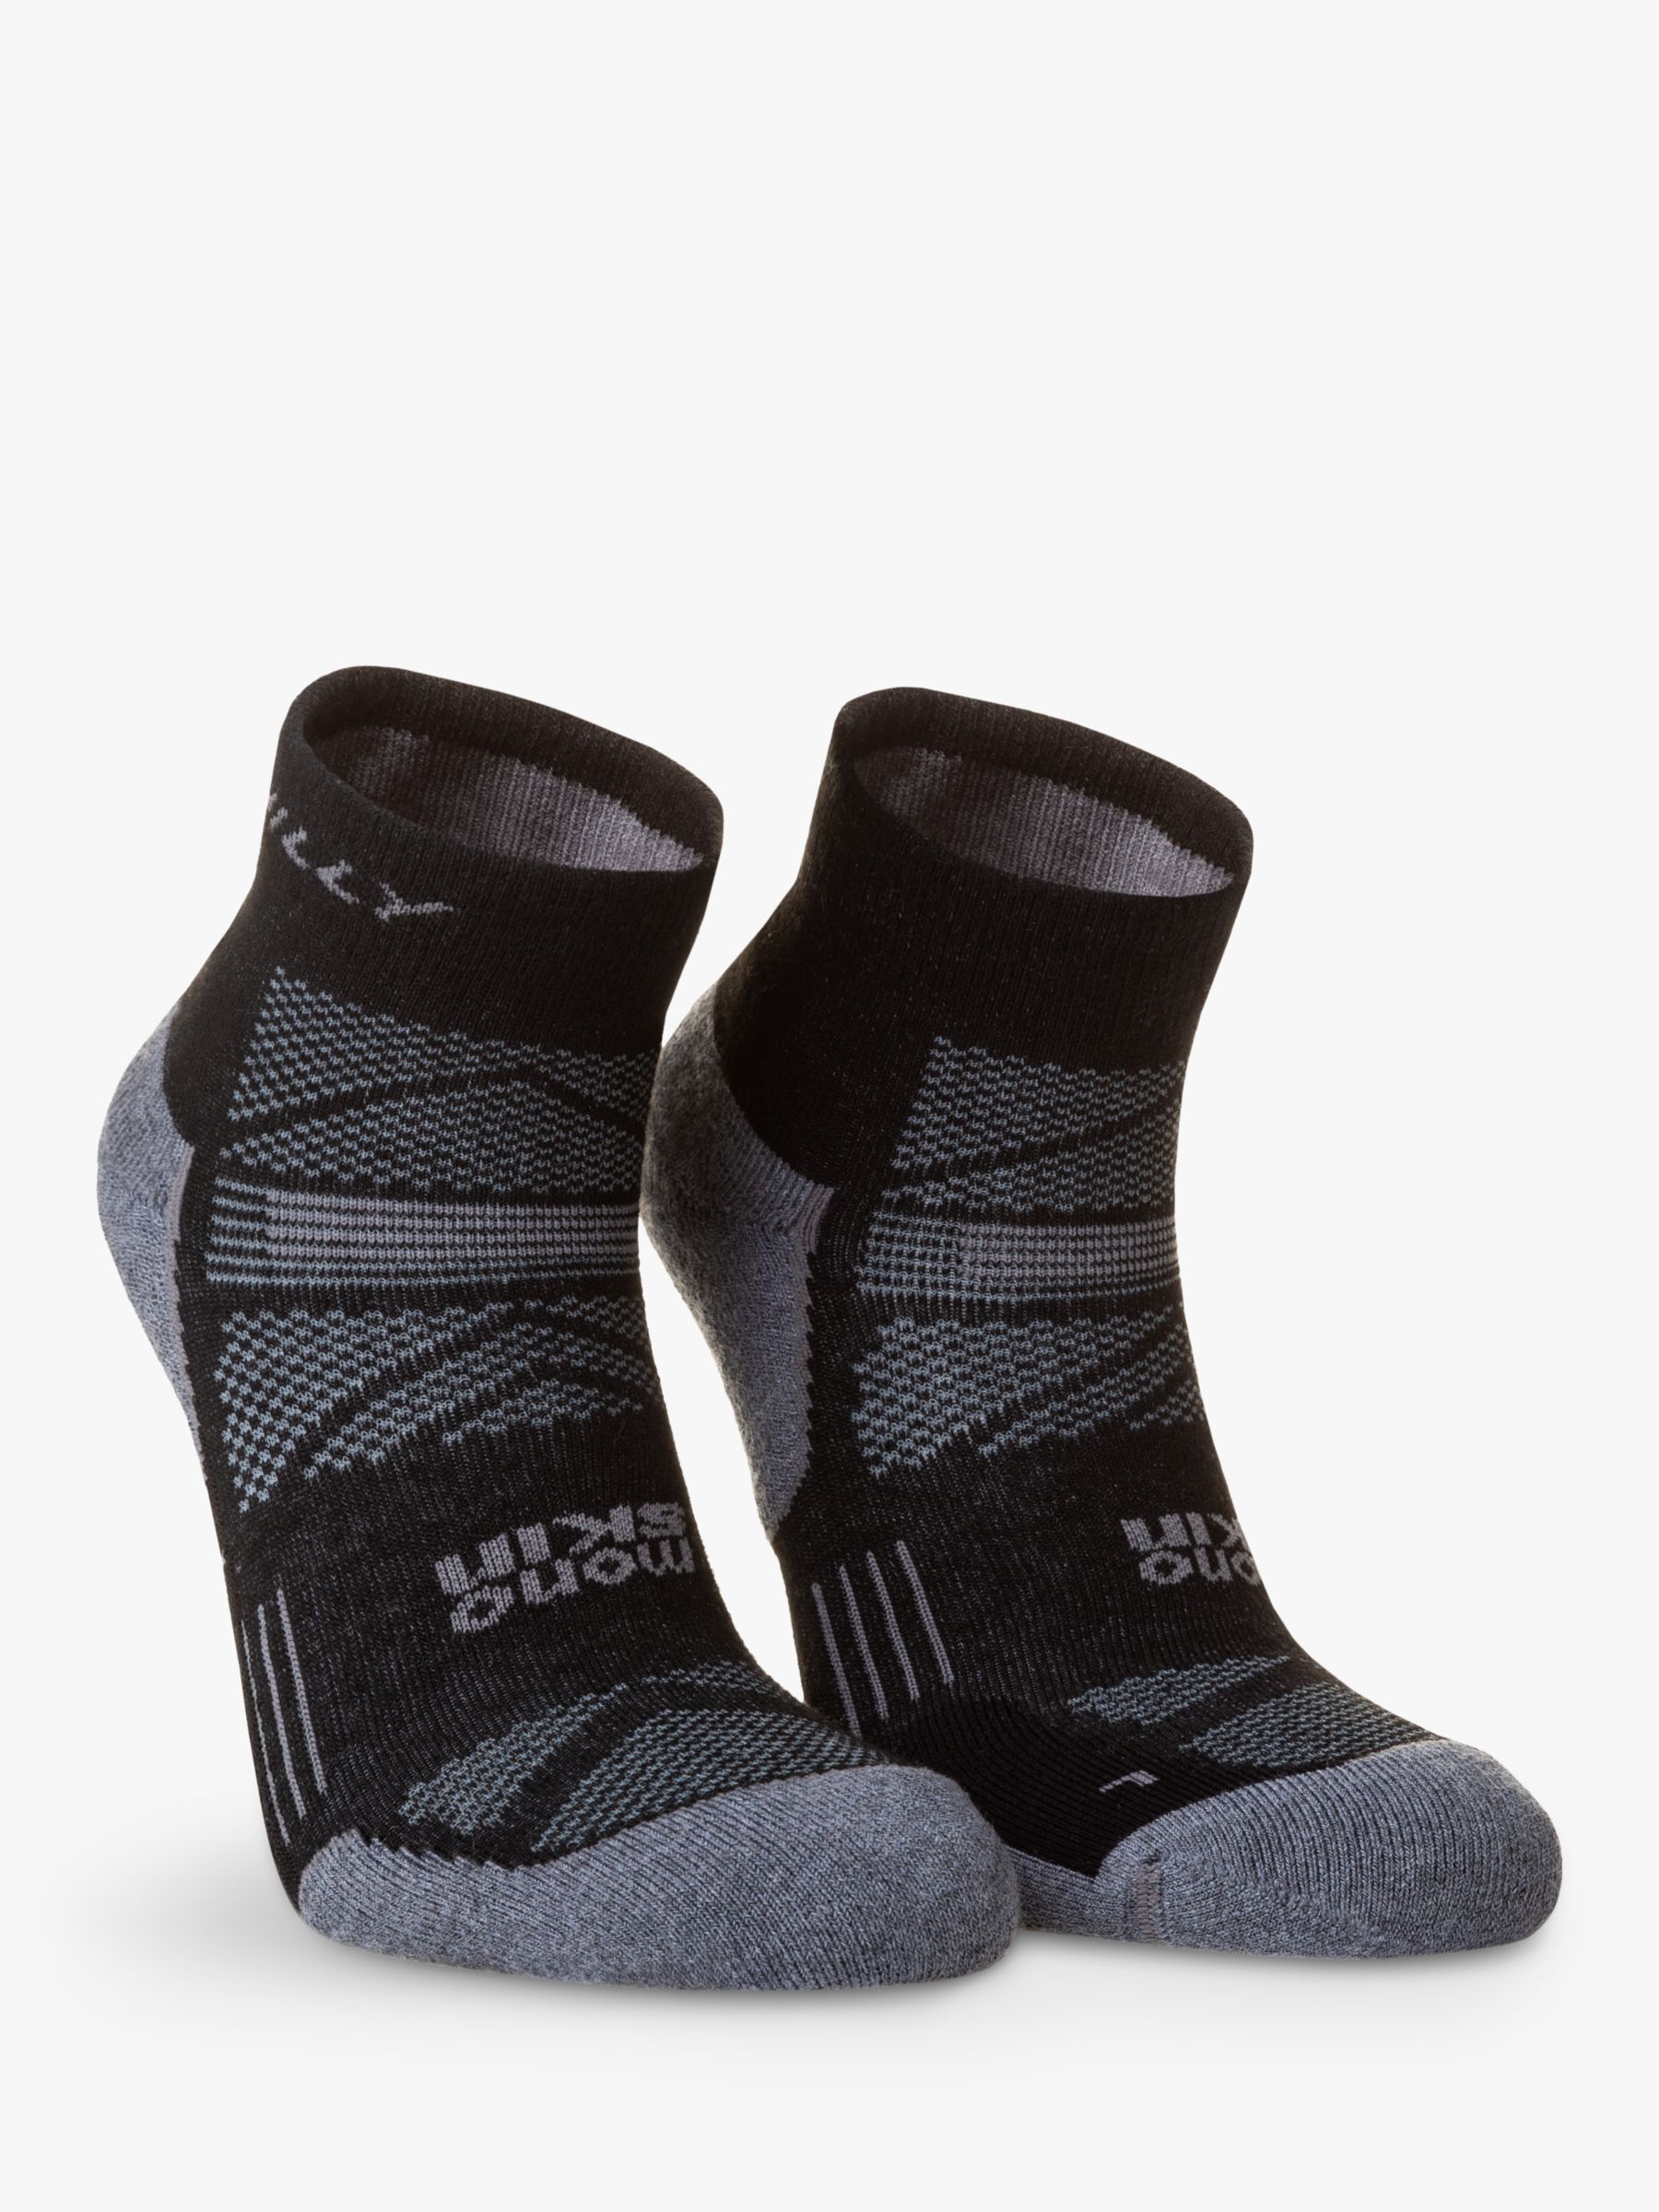 LV X SUPREME socks  Mens outfits, Designer socks, Clothes